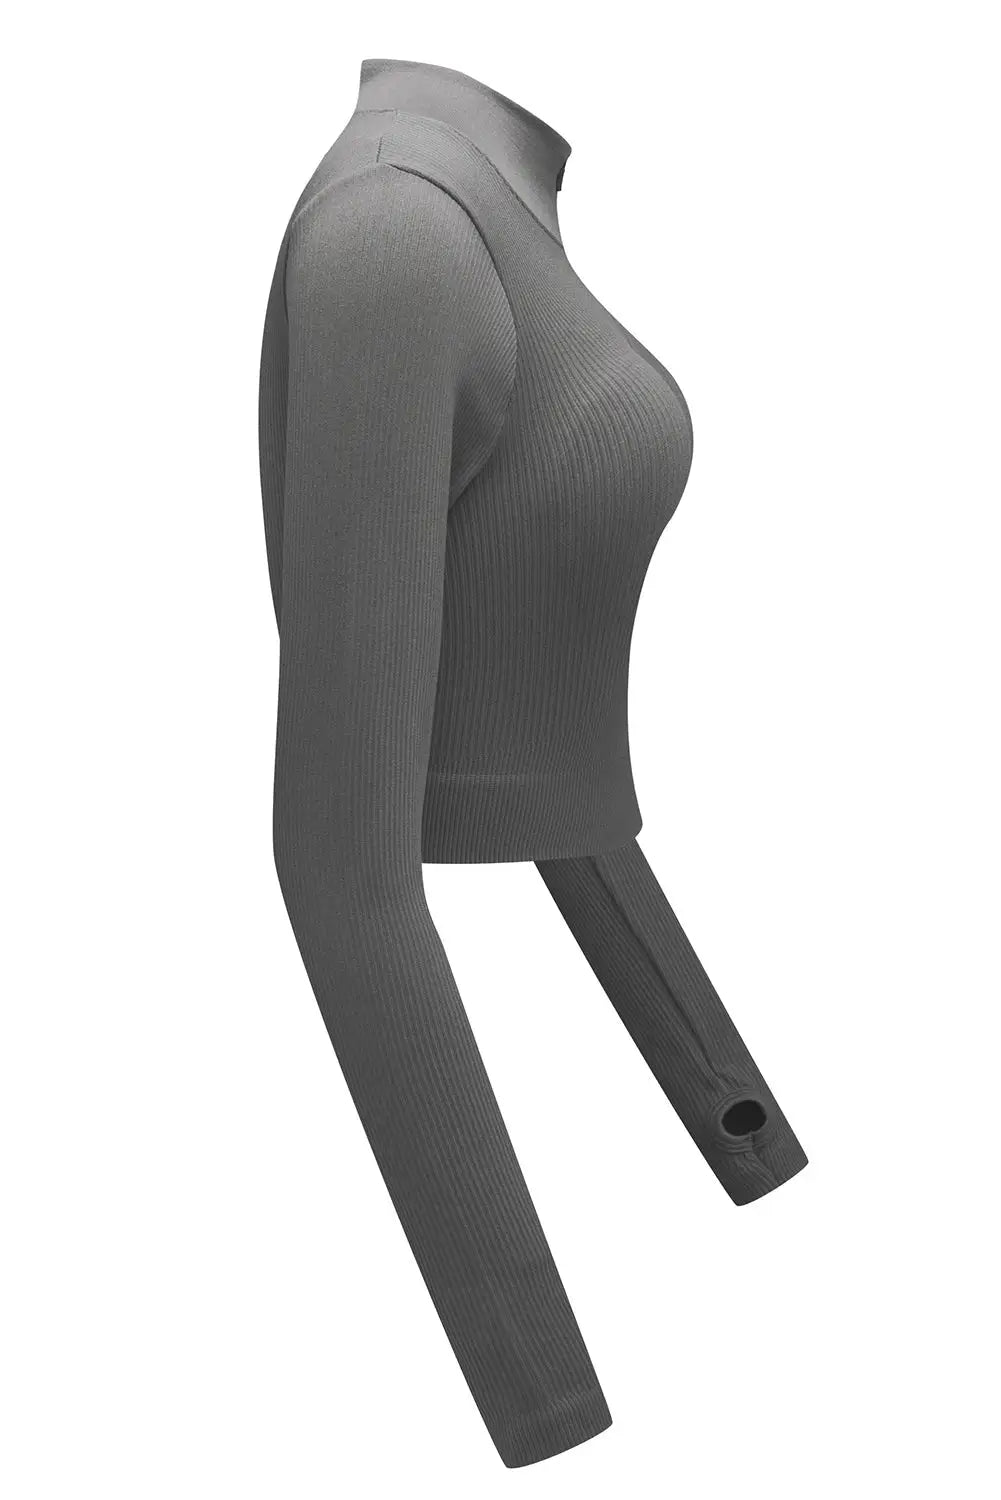 Black Half Zipper Long Sleeve Cropped Yoga Top - Activewear